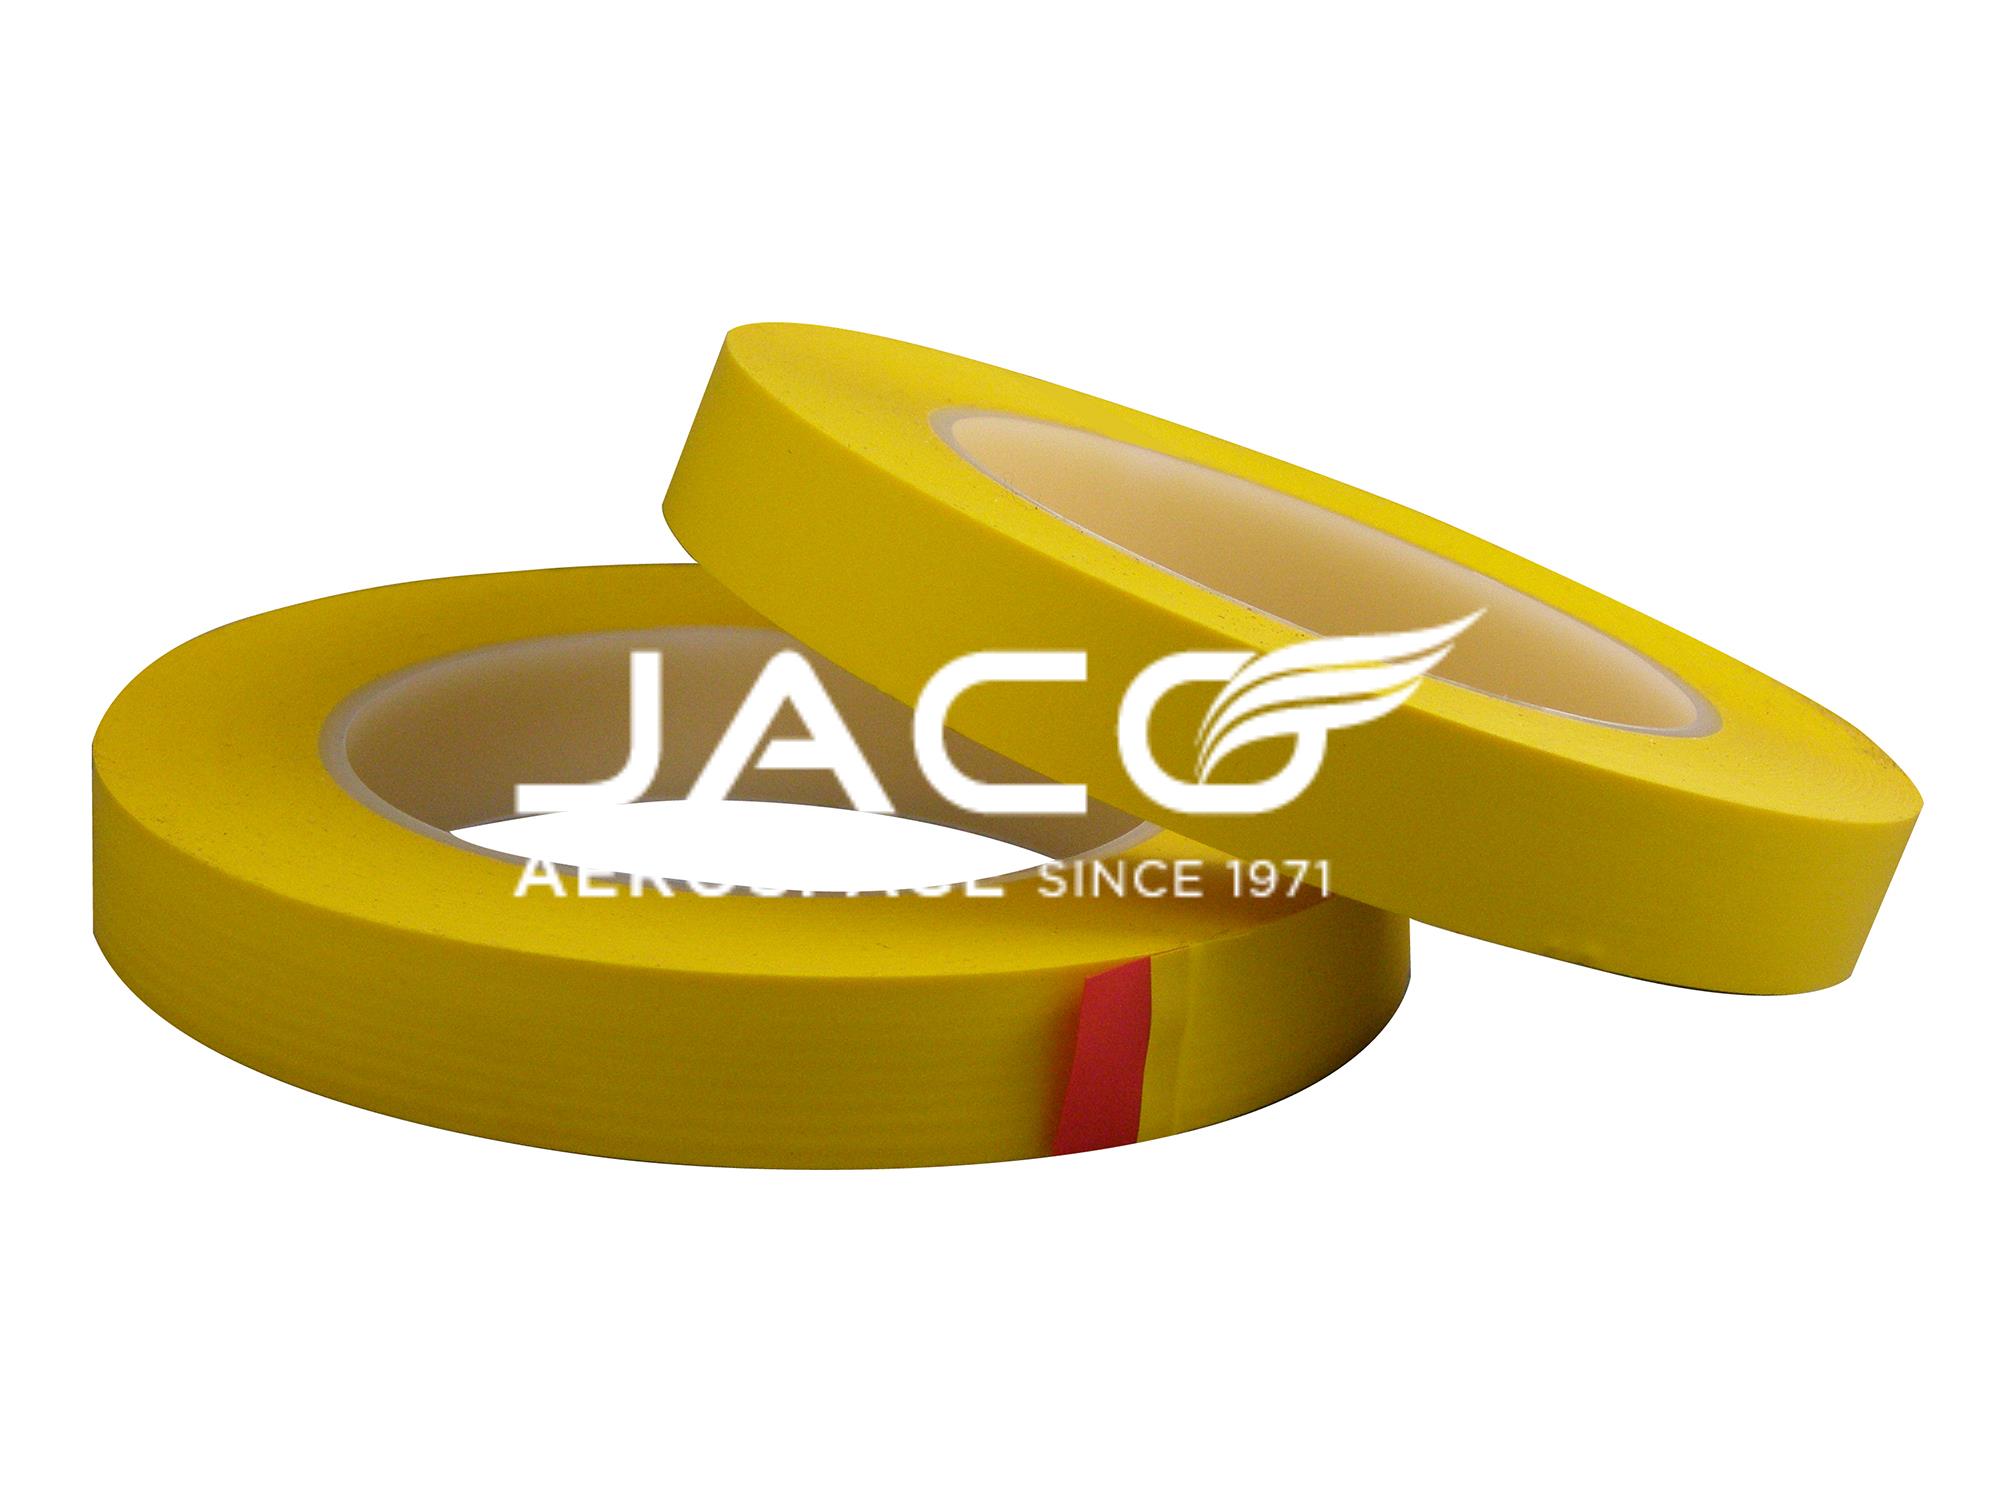  - Patco 1776 PVC Fineline Masking Tape